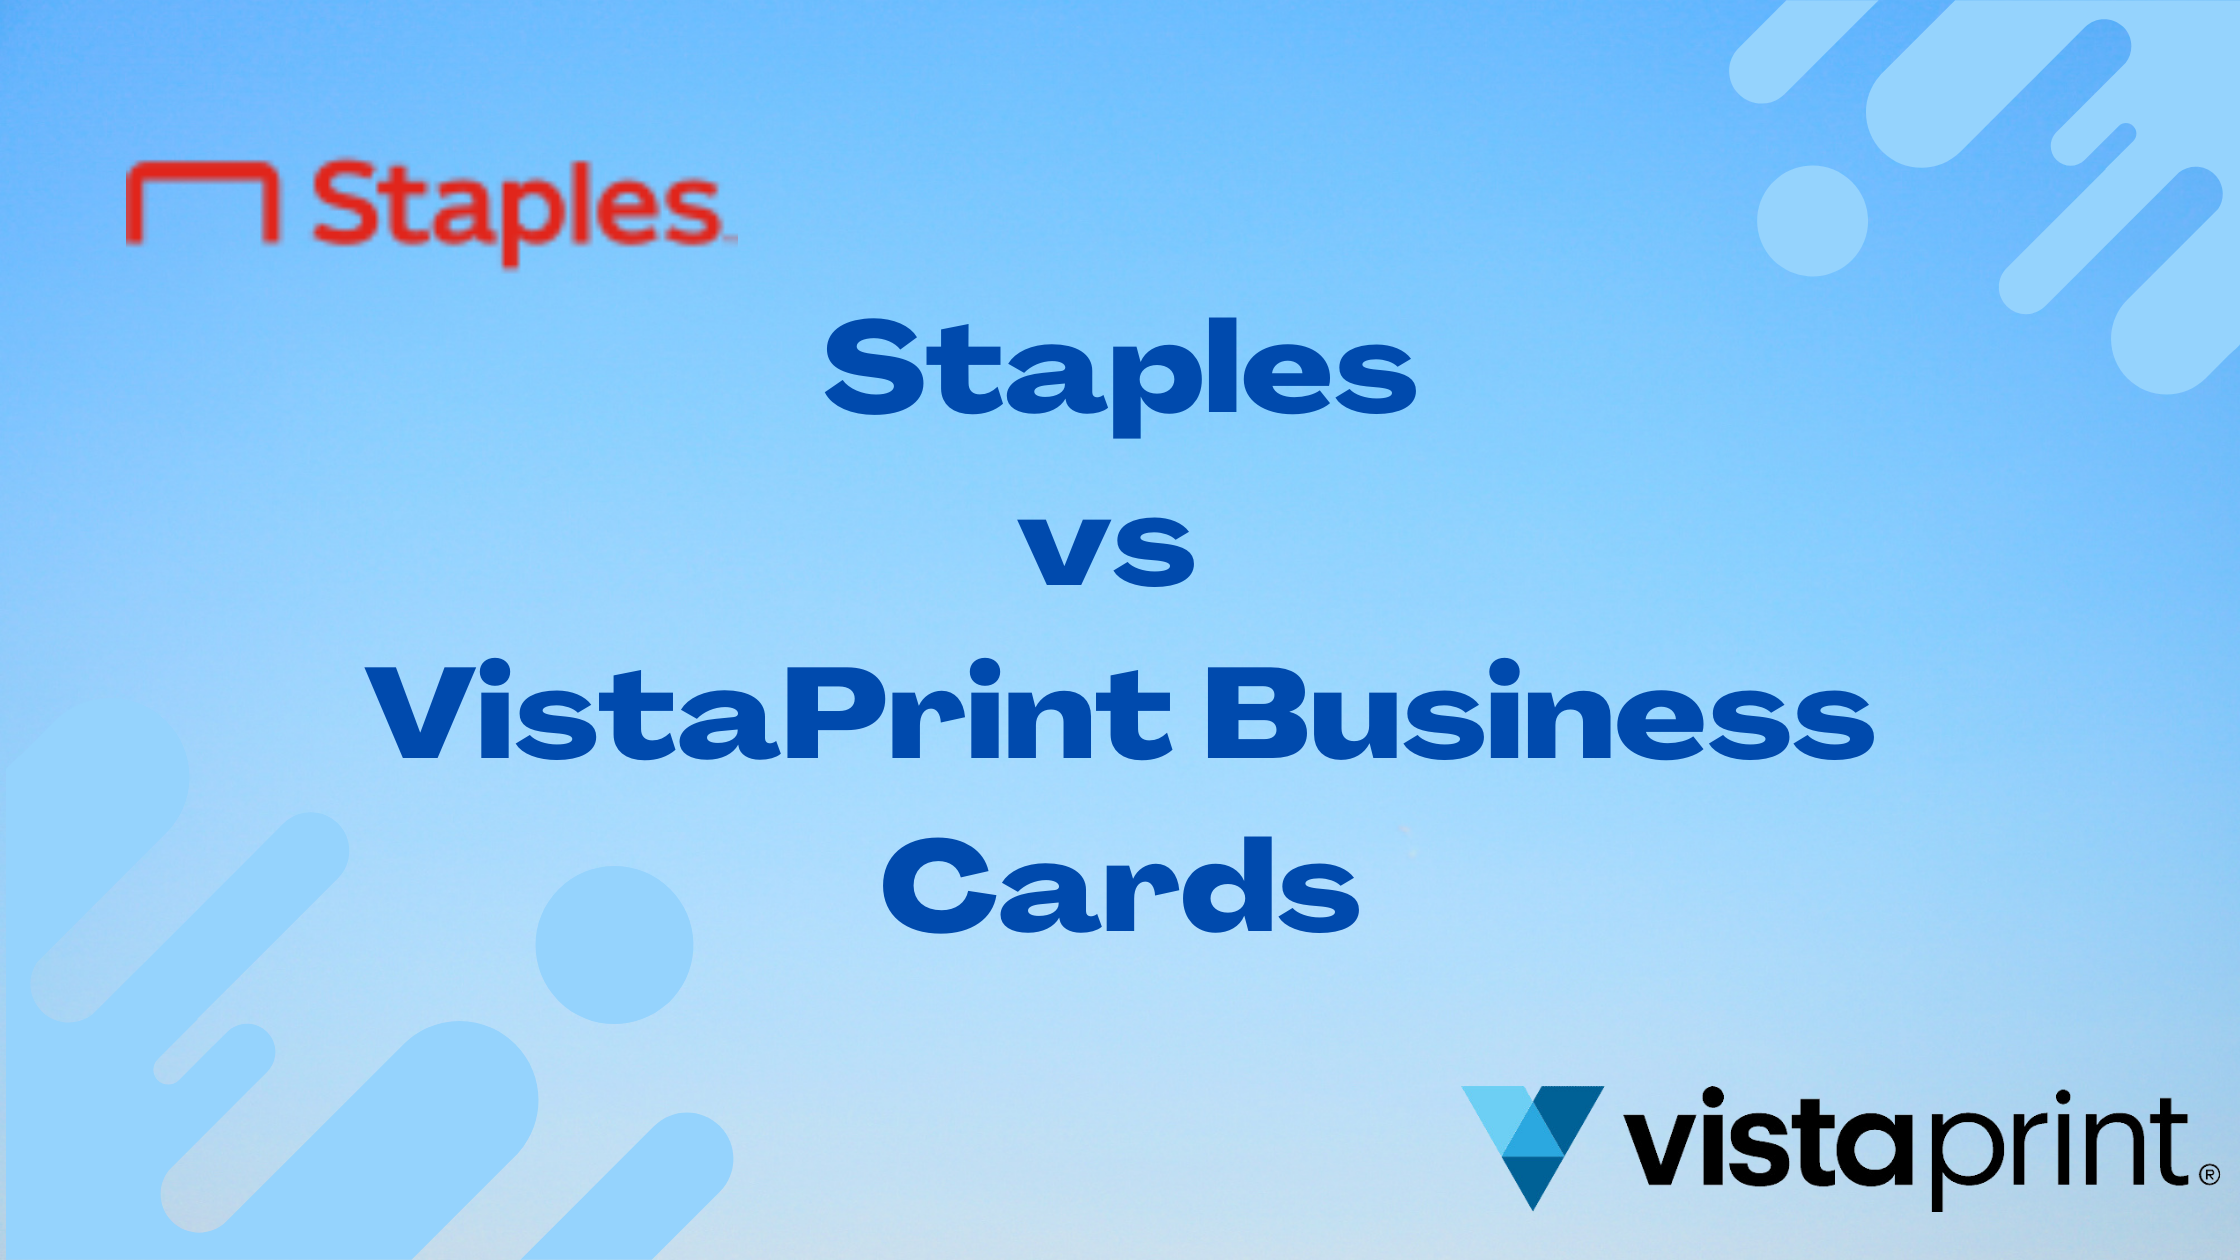 Staples vs Vistaprint Business Cards